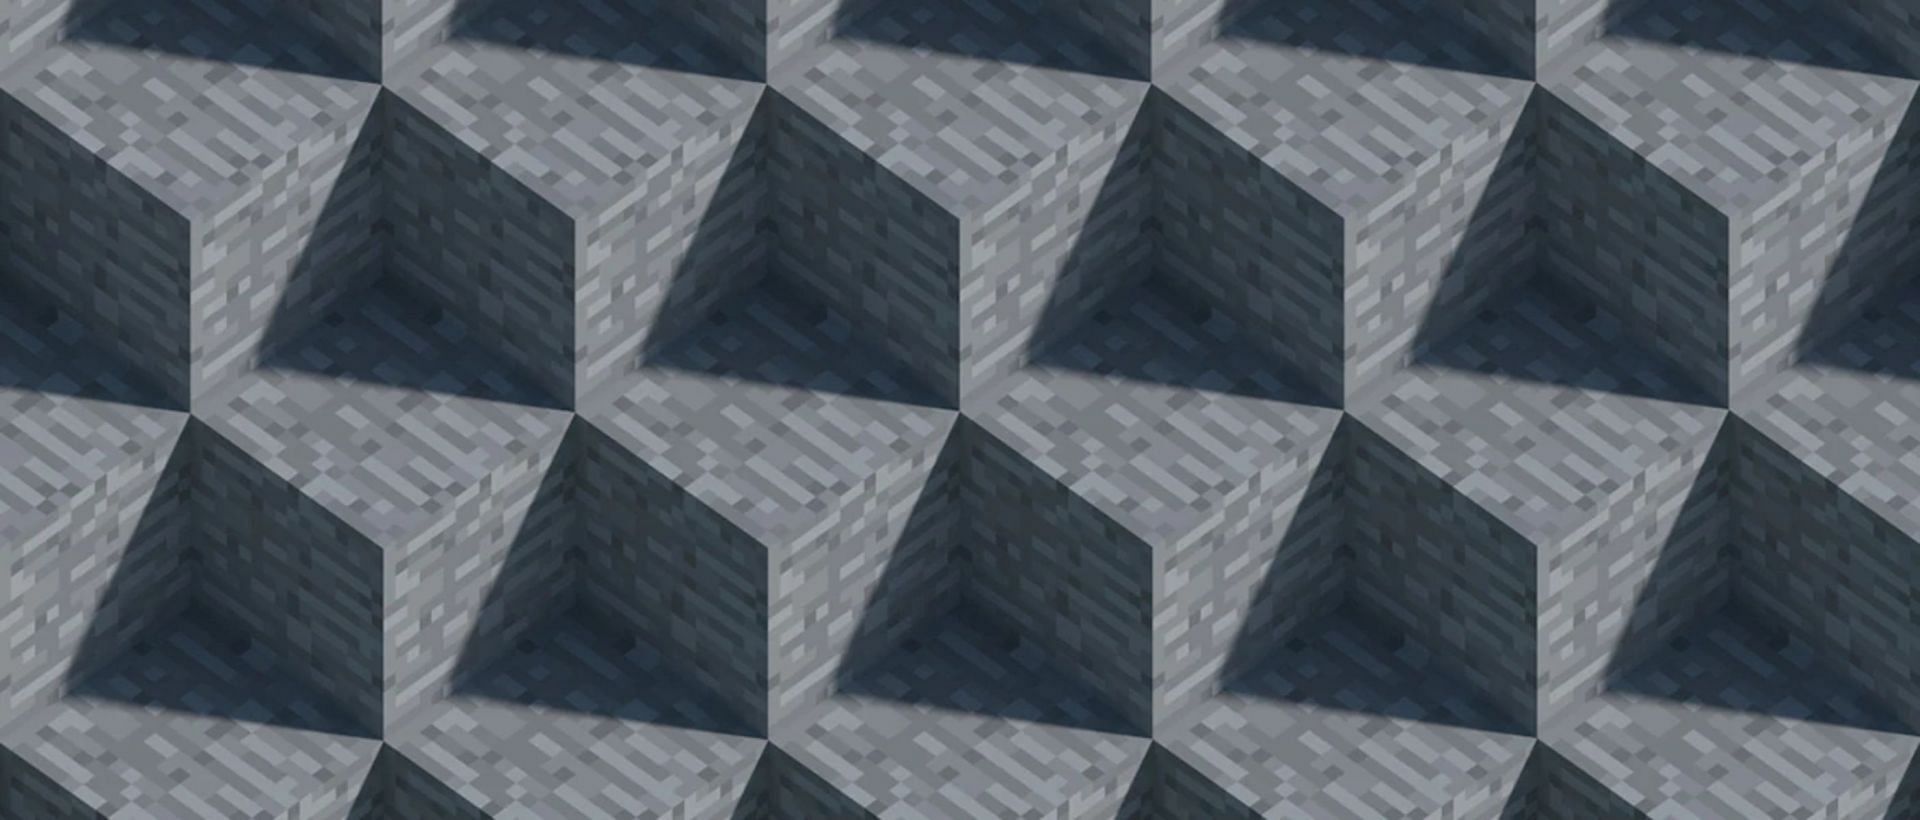 Stone and cobblestone are found universally in the Overworld (Image via Minecraft.net)